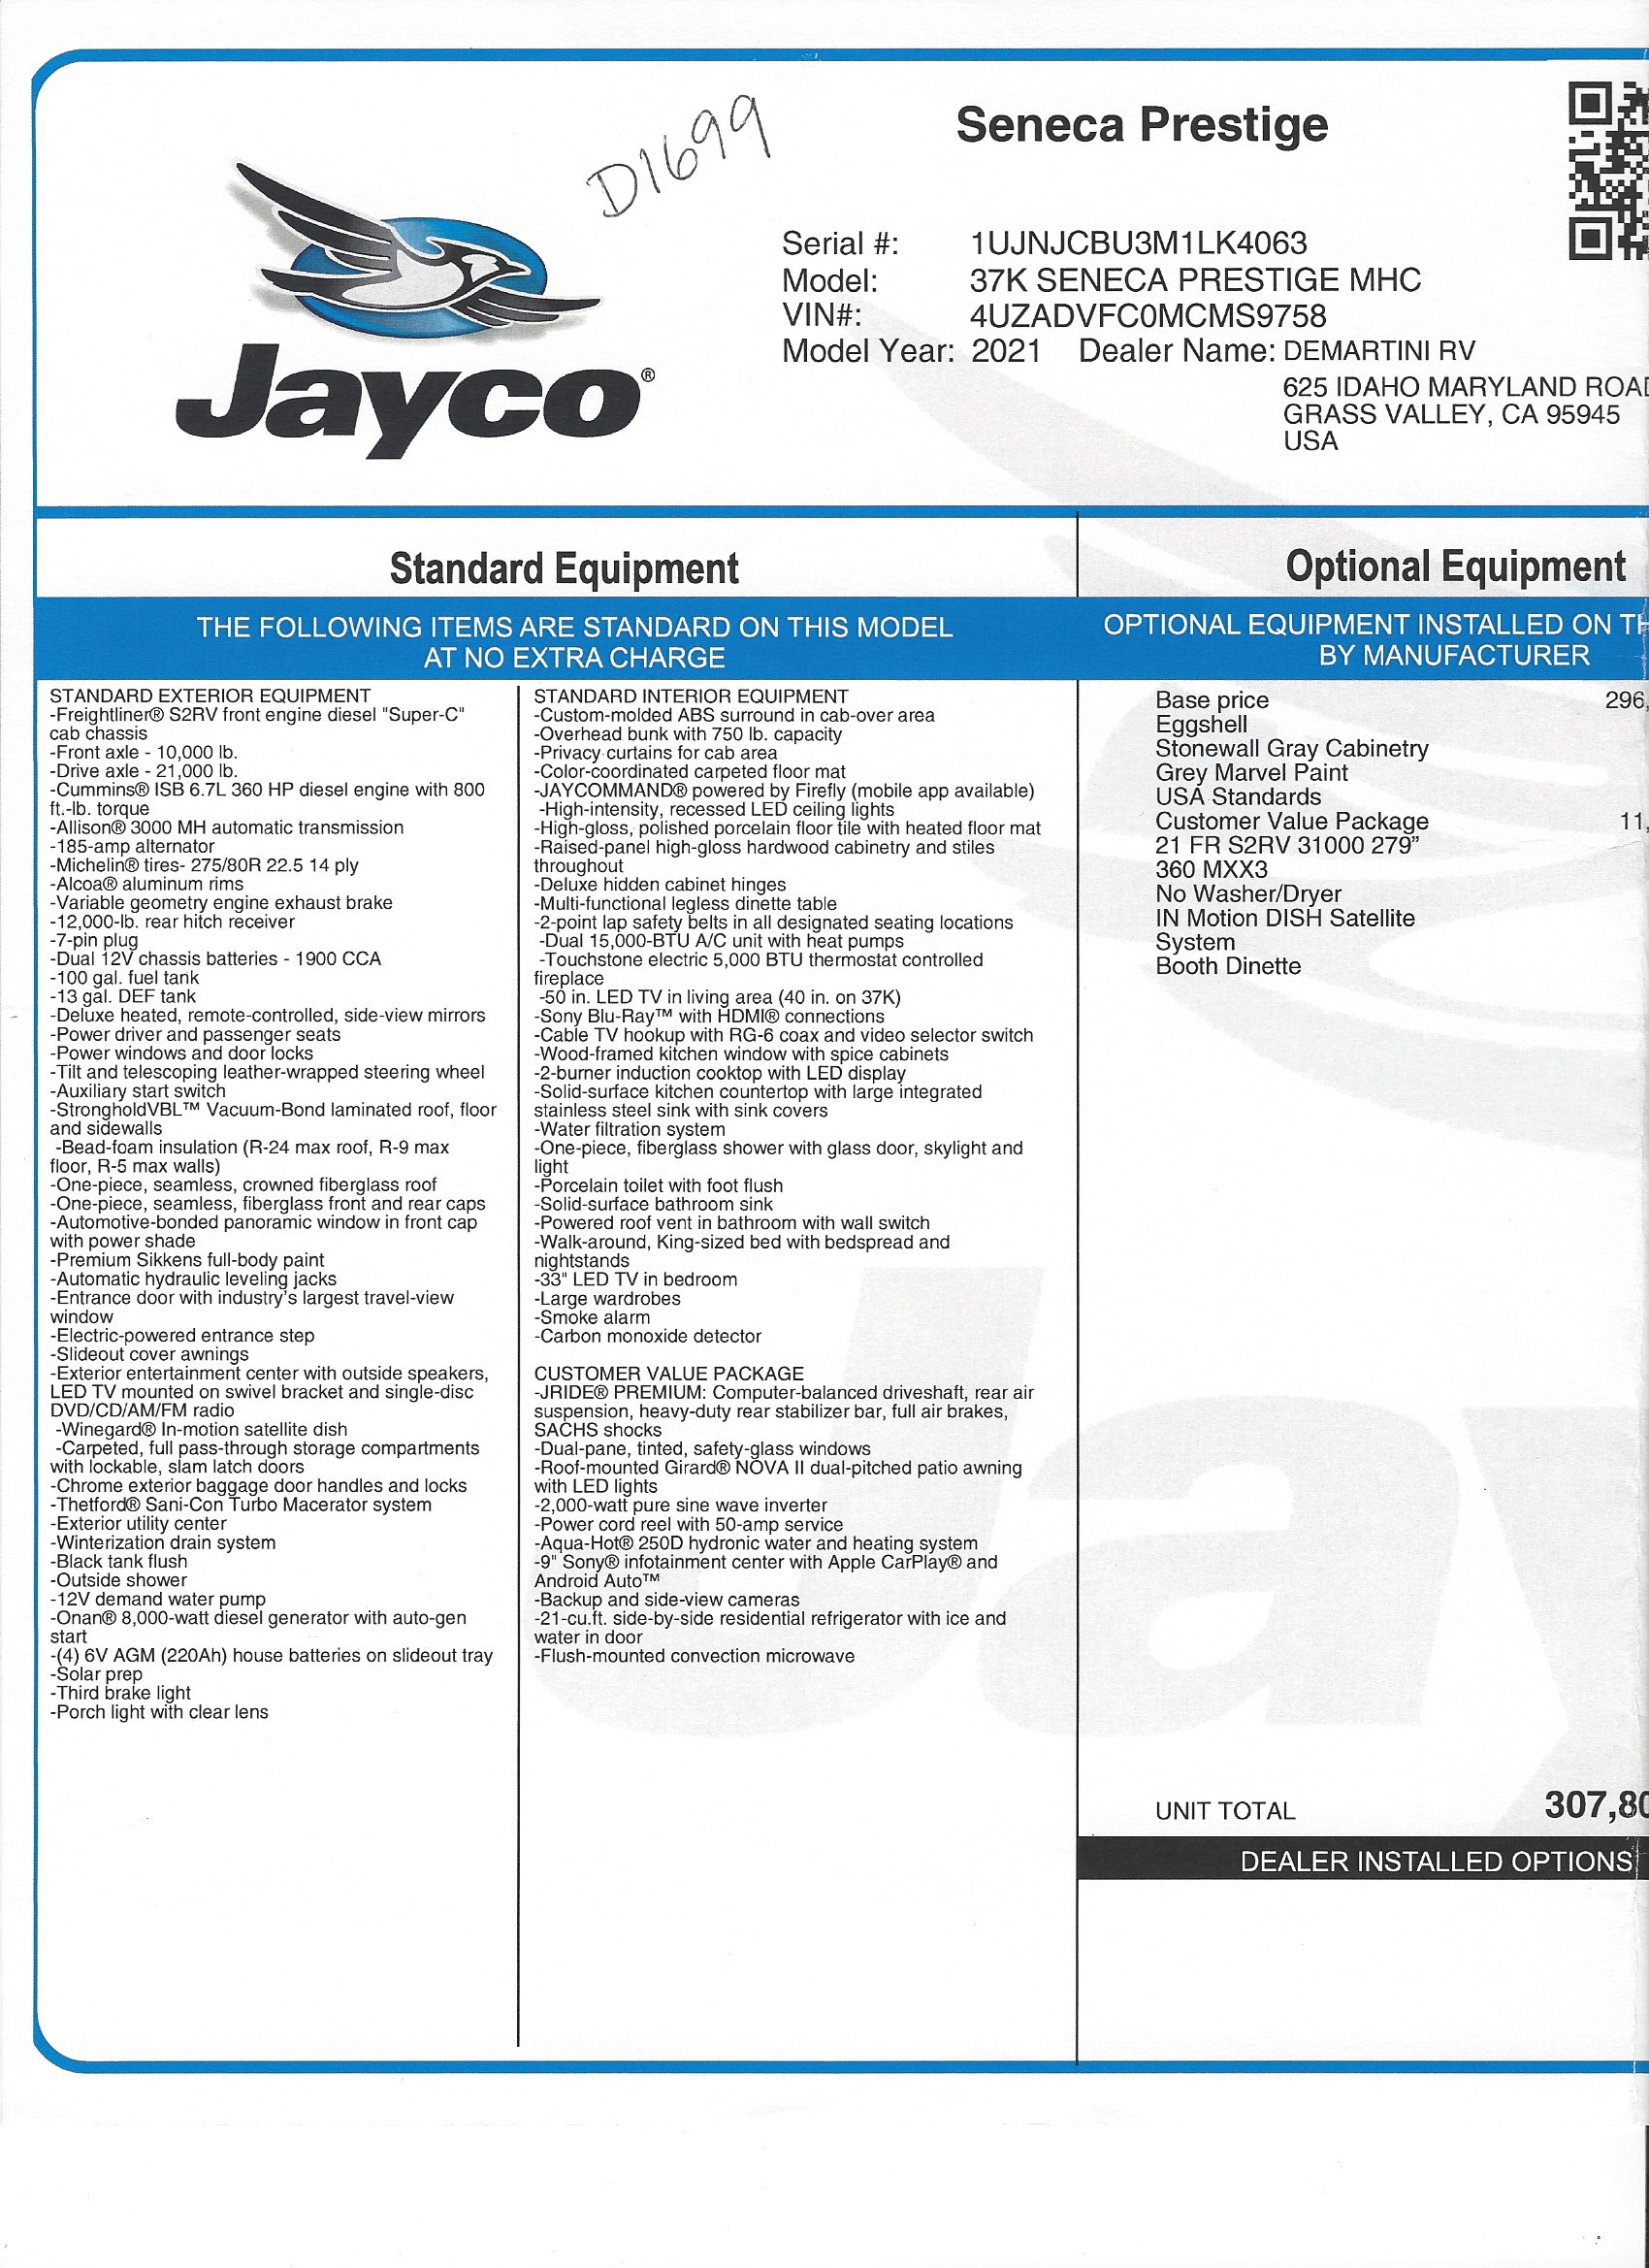 2021 Jayco Seneca Prestige 37K MSRP Sheet